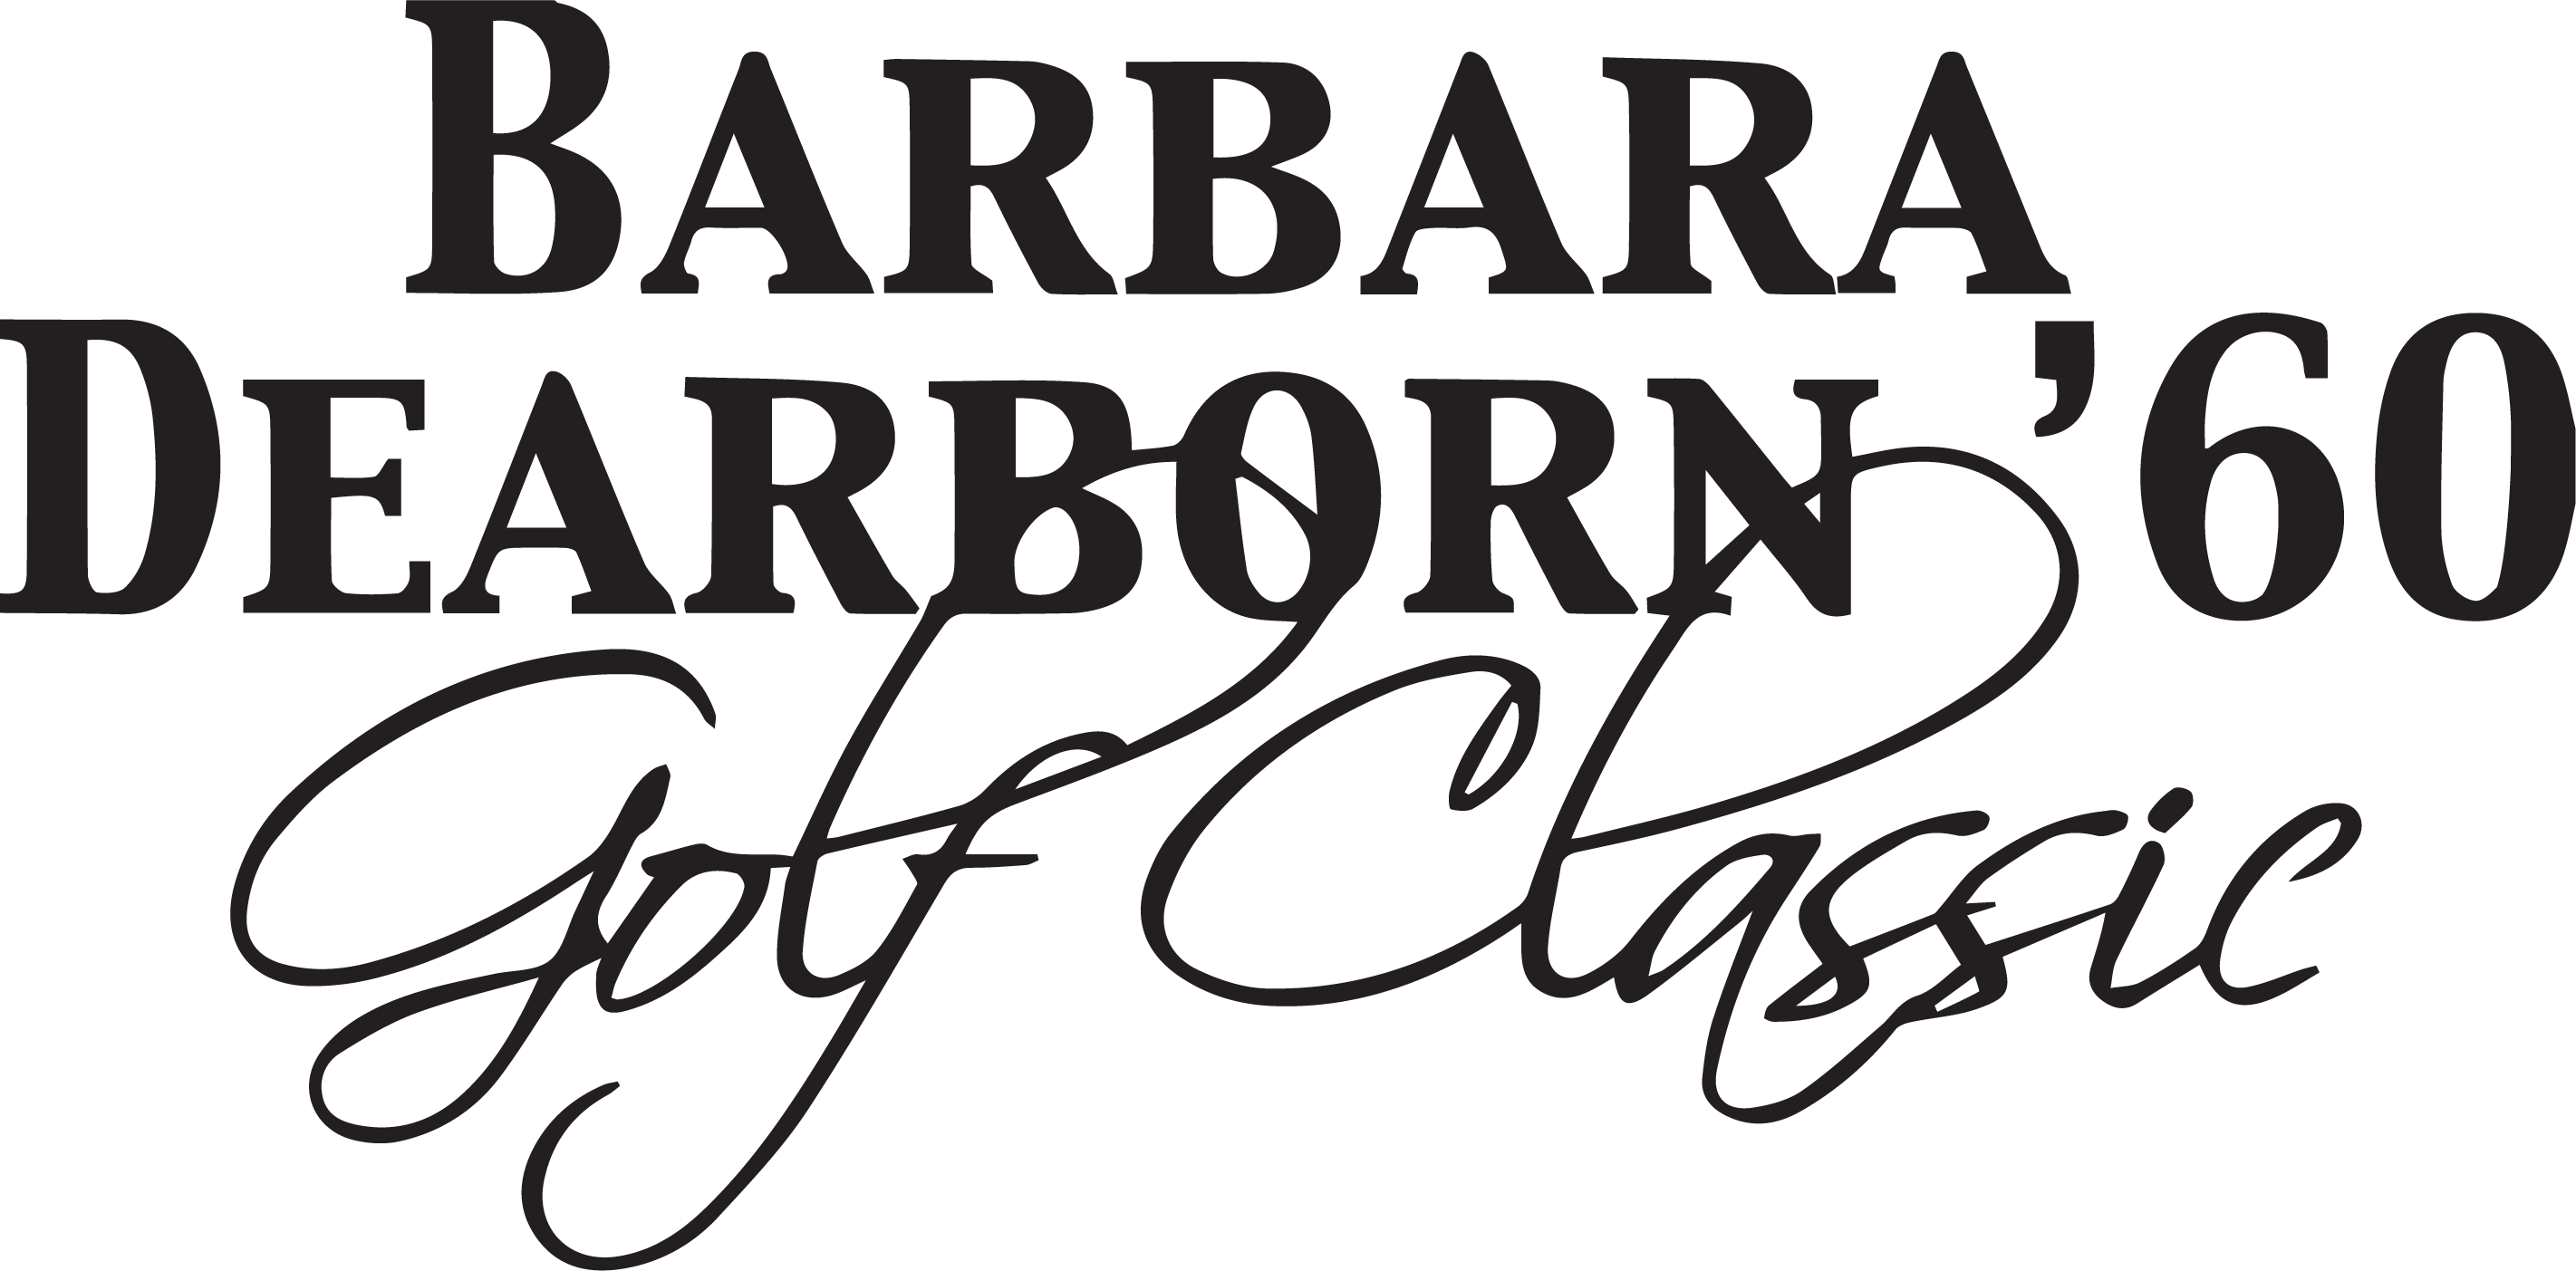 Barbara Dearborn '60 Golf Classic